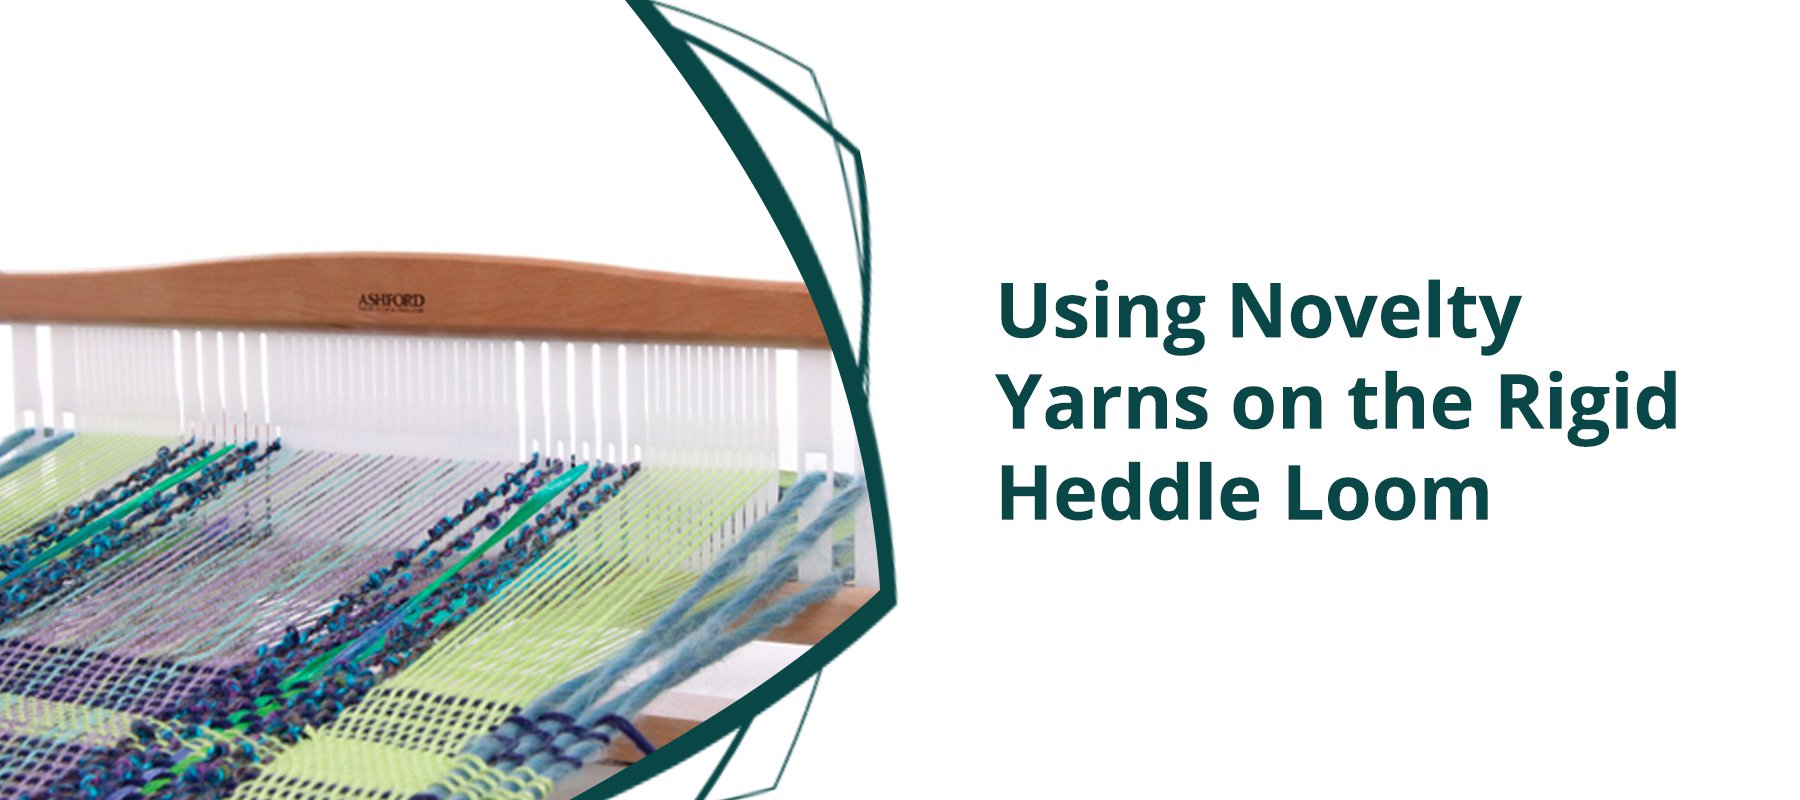 Using Novelty Yarns on the Rigid Heddle Loom